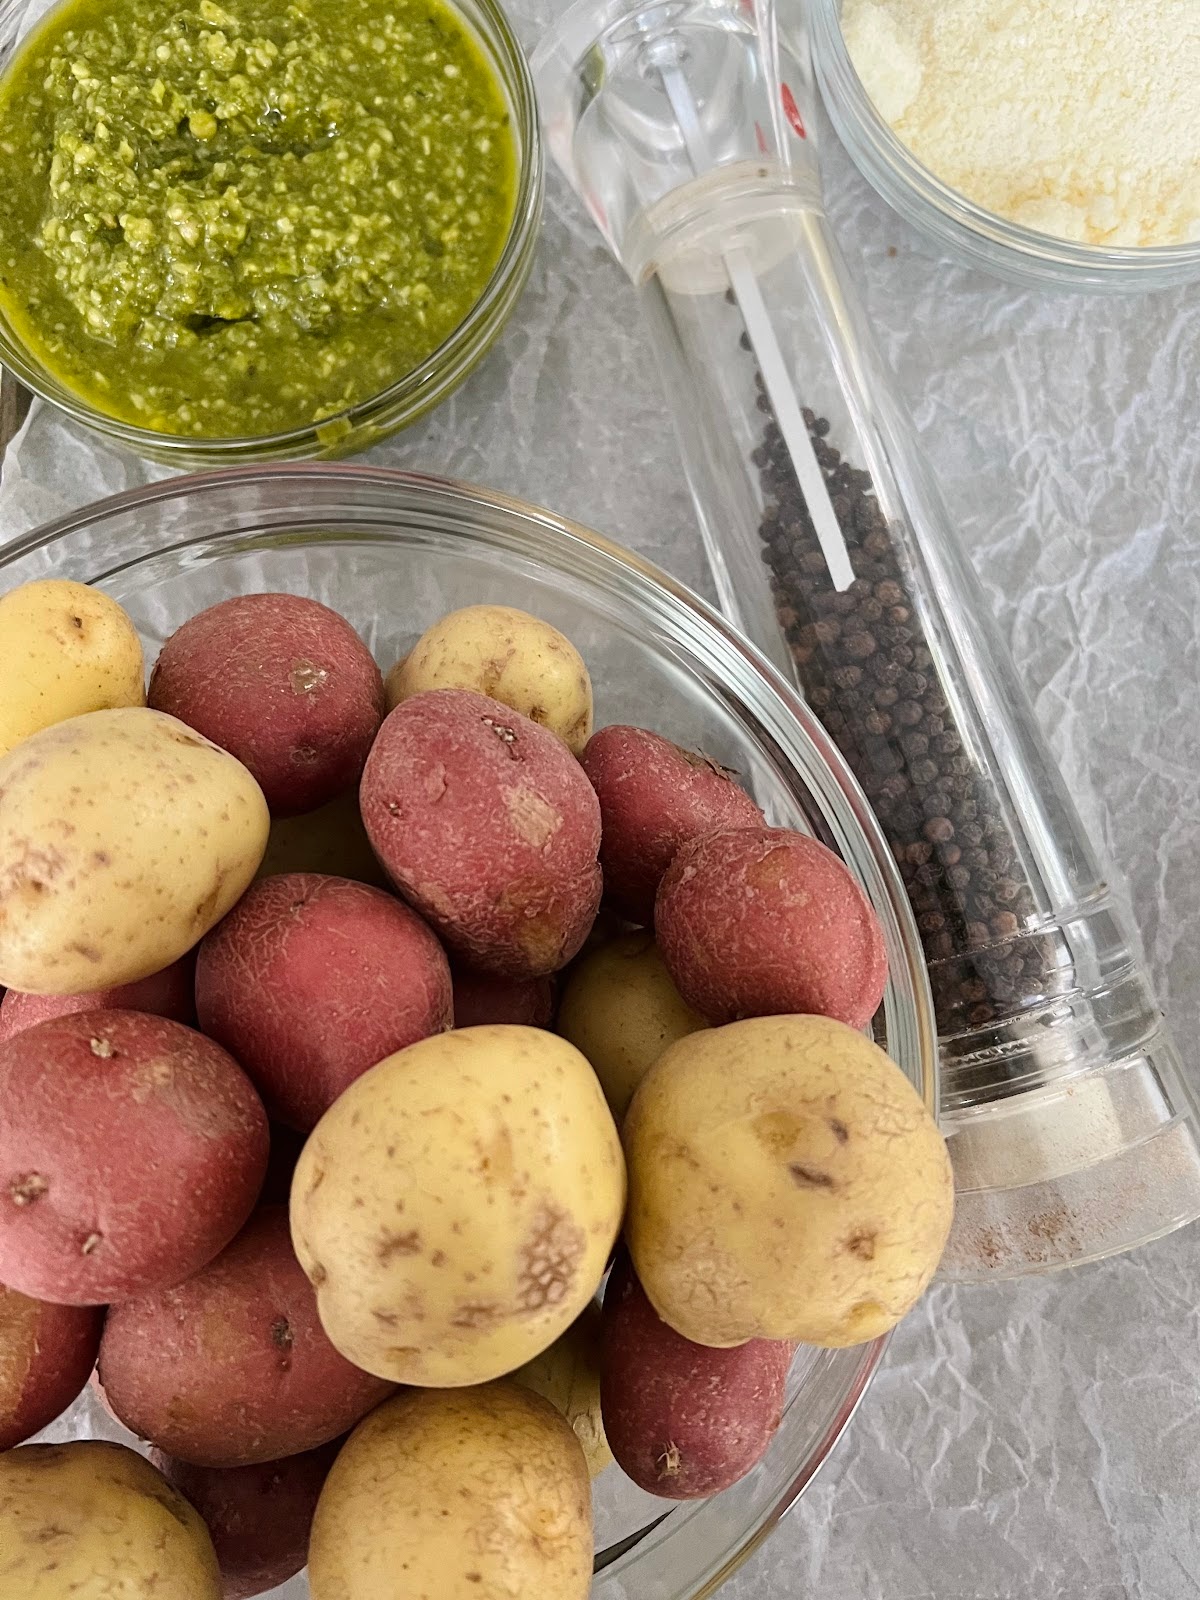 Ingredients for Pesto Roasted Potatoes.